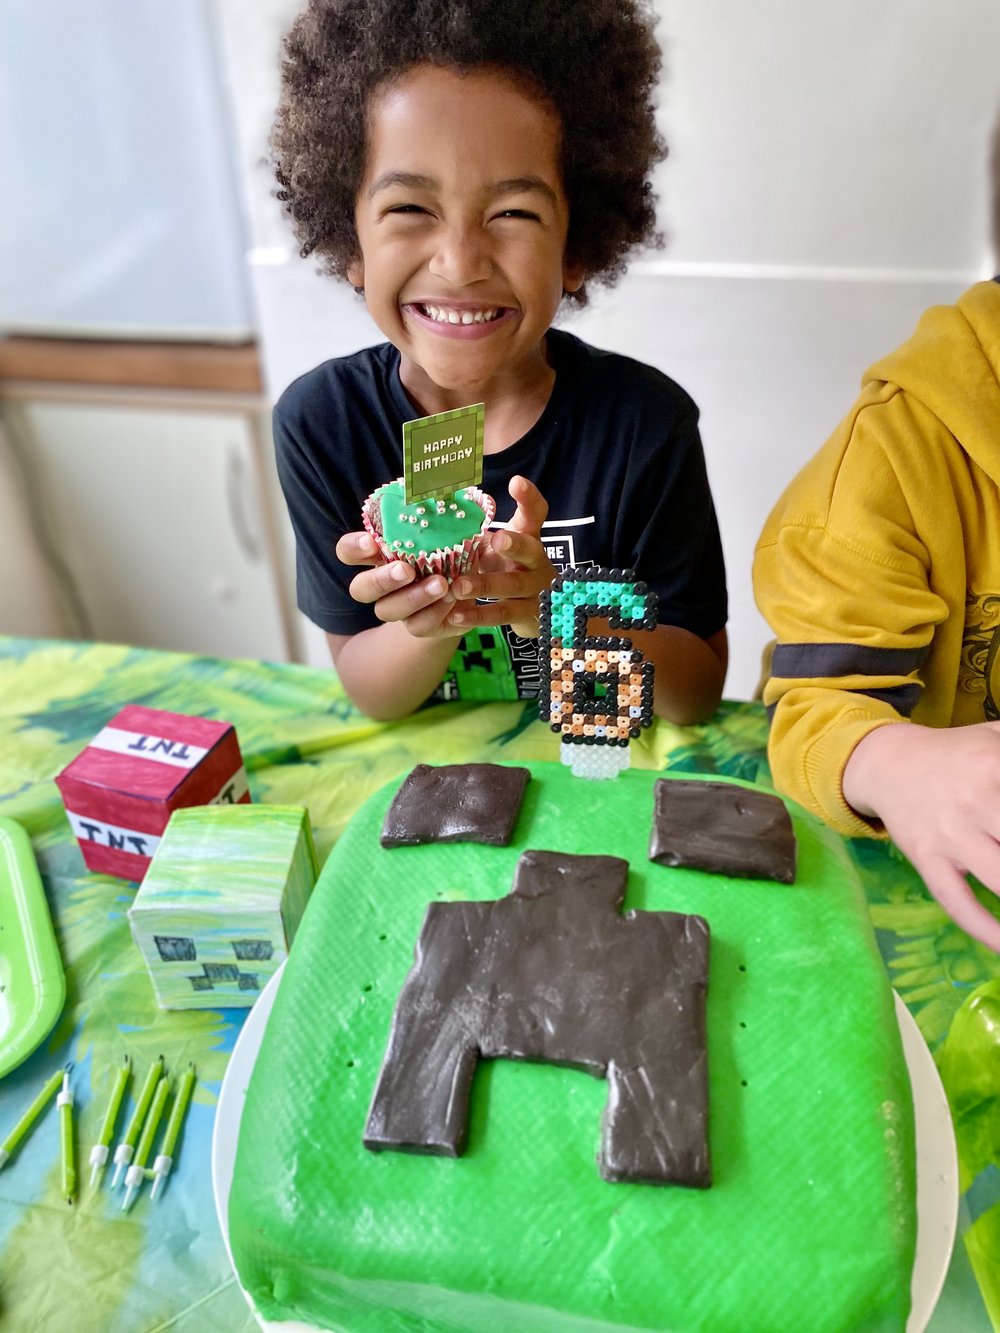 Minecraft / Birthday Minecraft birthday party